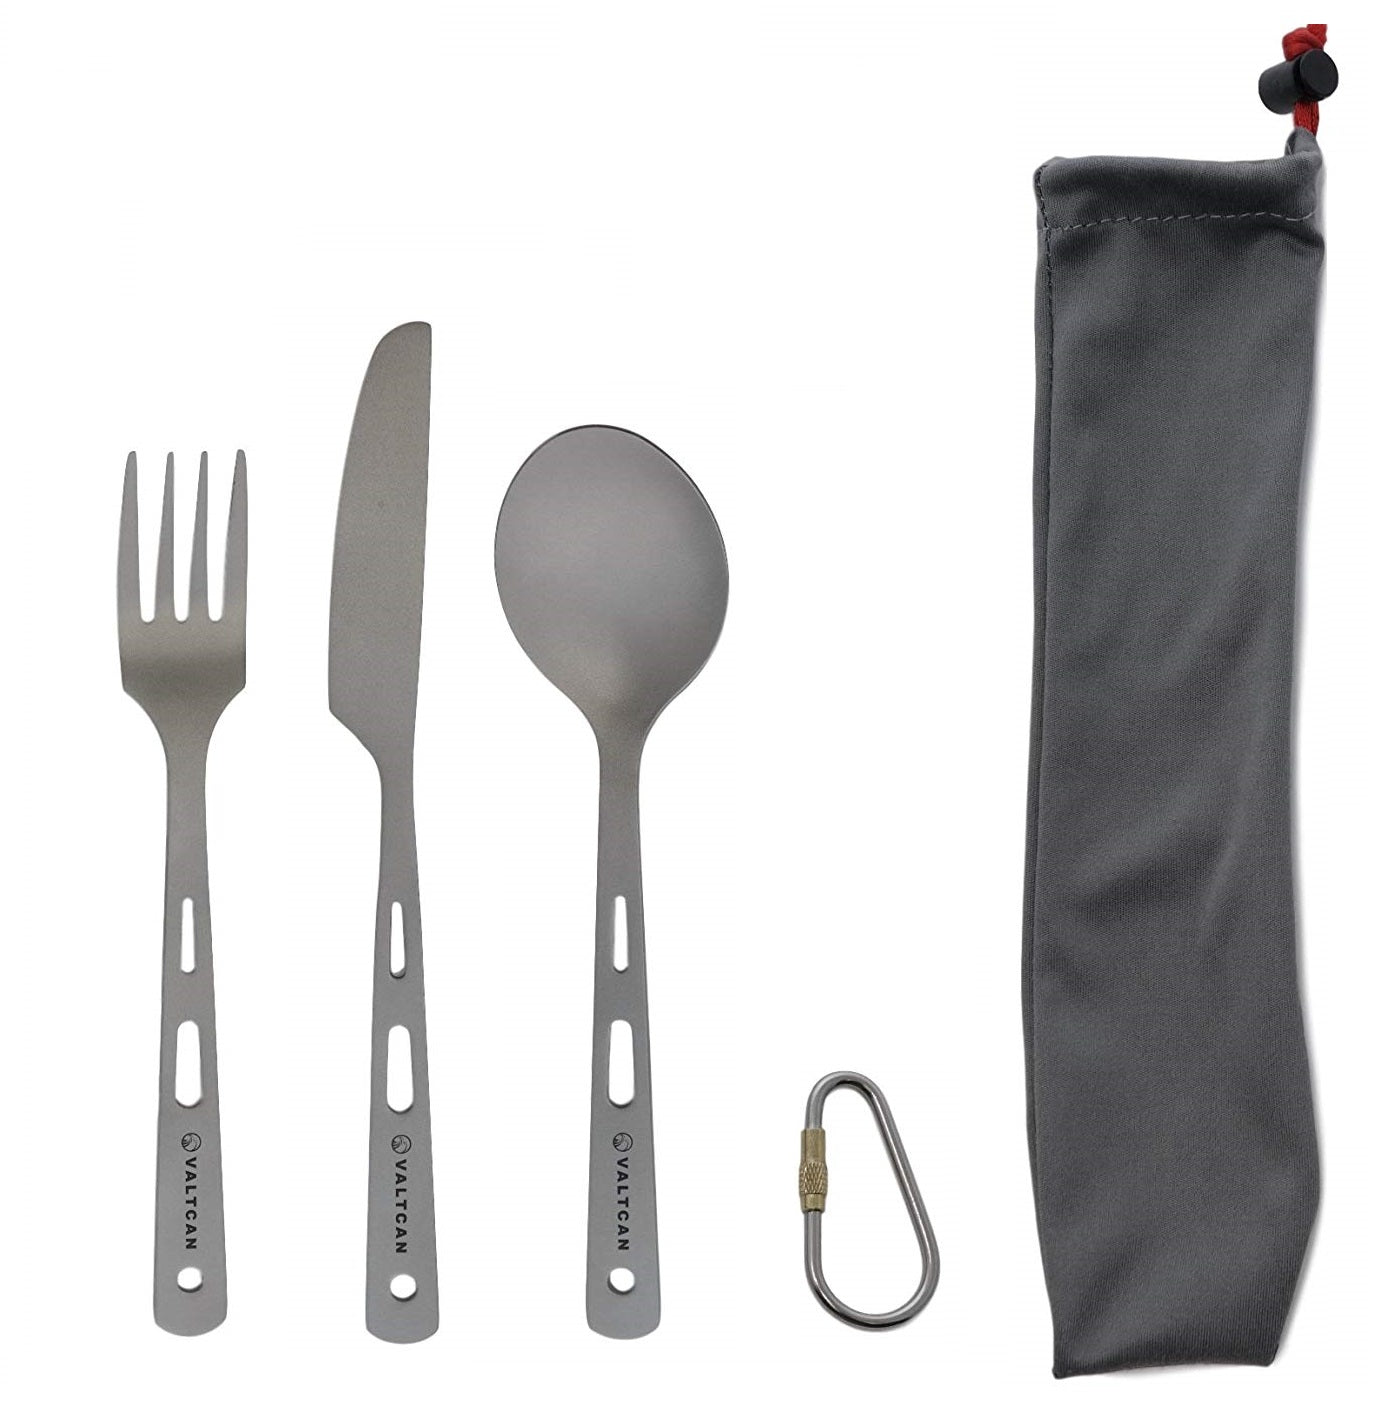 ZURSSEU Flatware, 3 Piece Camping Utensil Set, Forks, Knives and